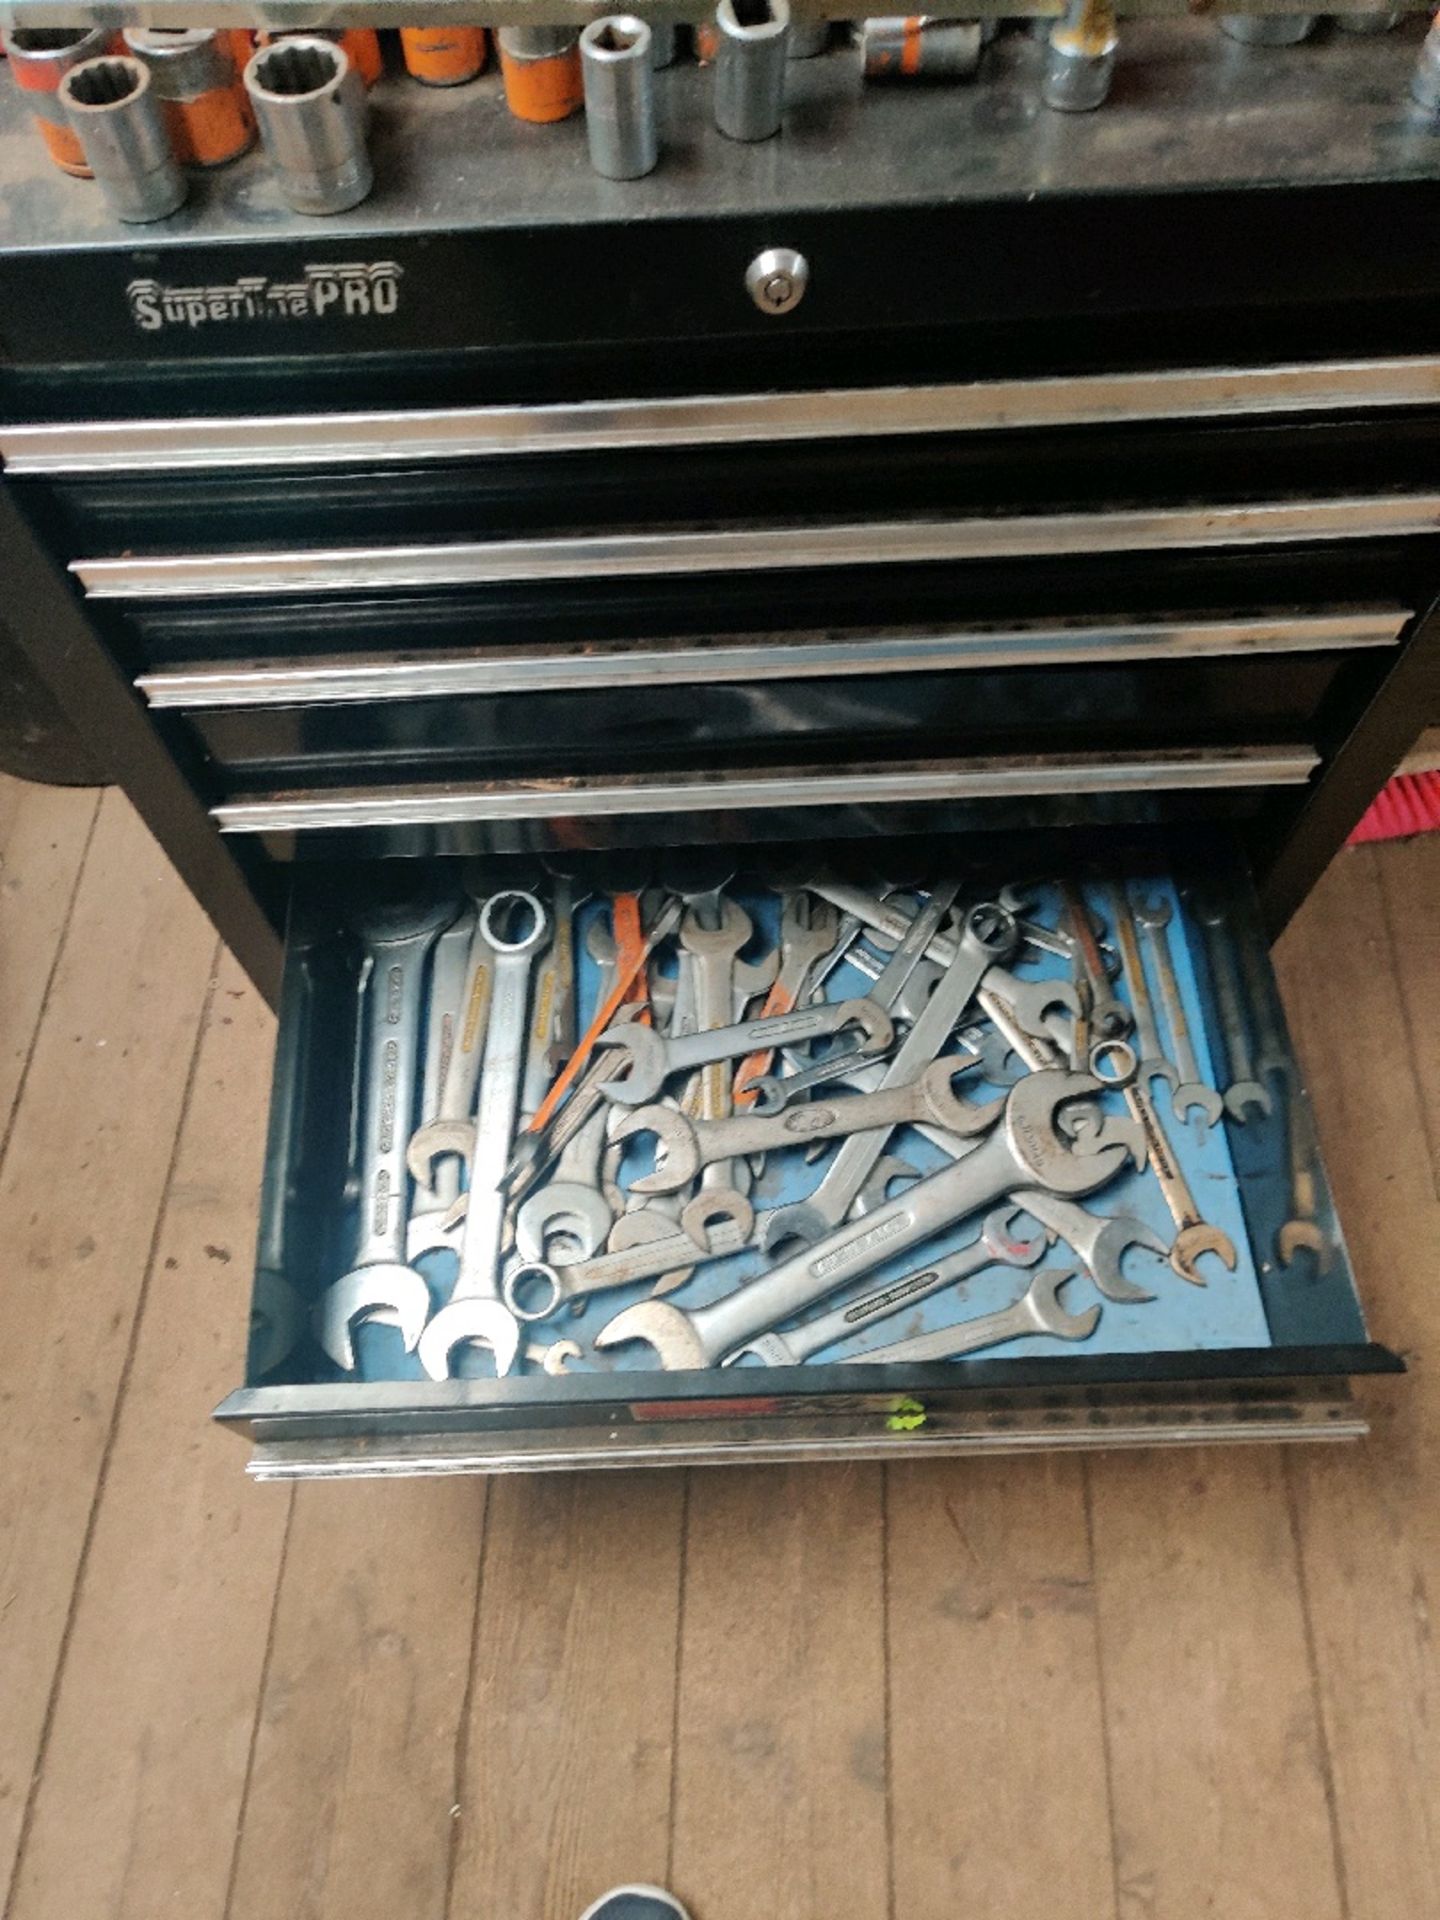 Superline pro tool box - Image 4 of 4